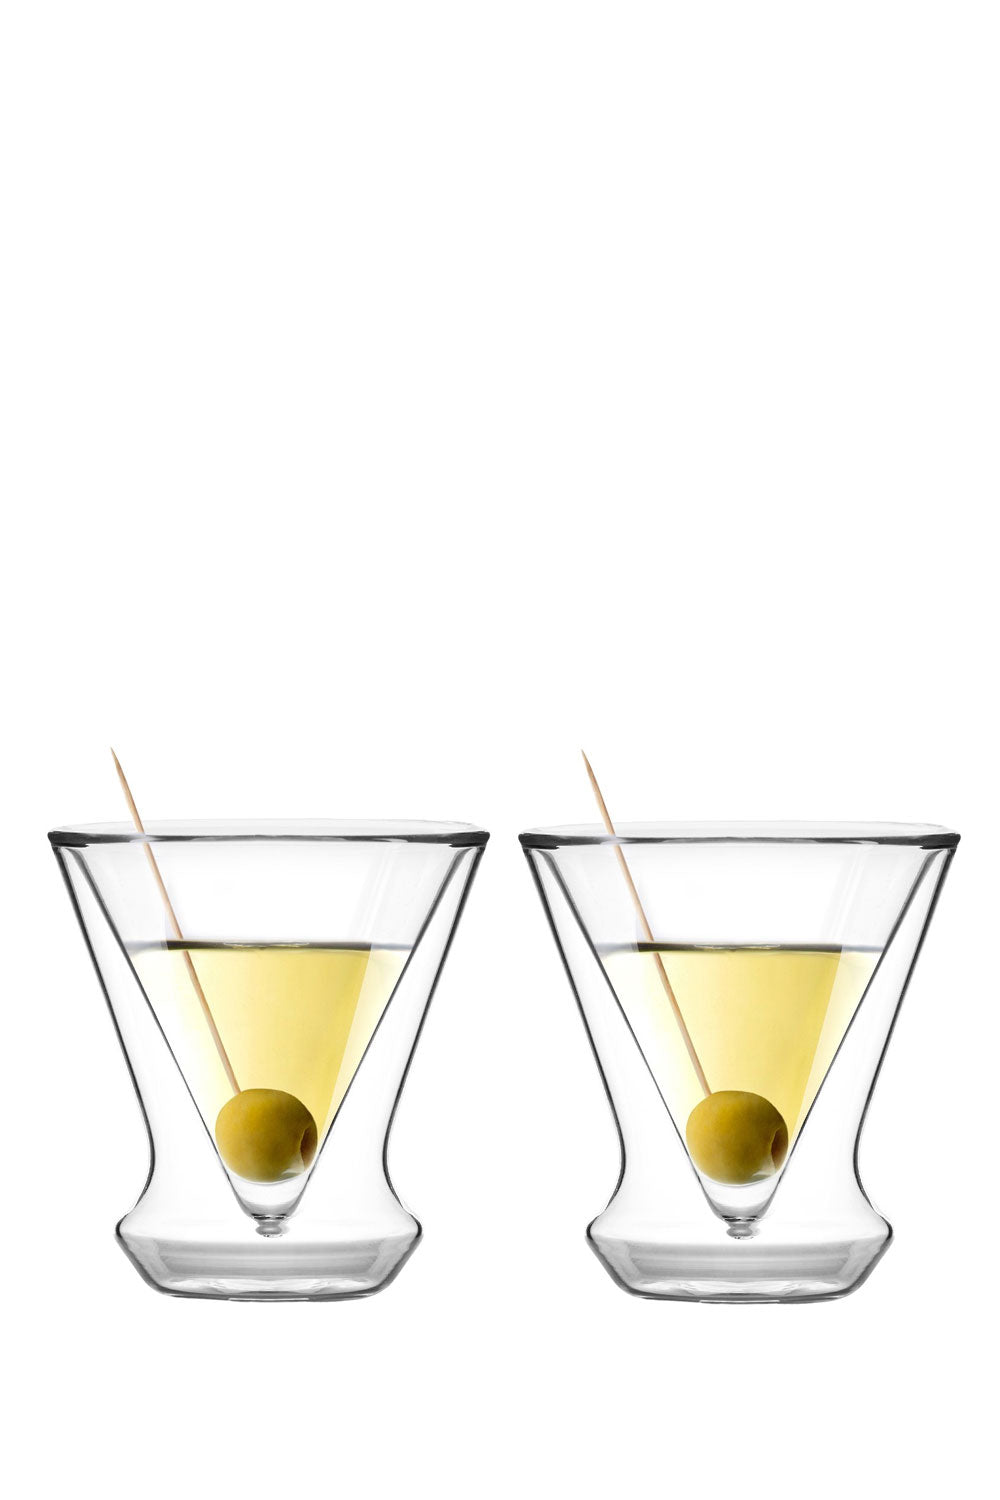 Soho Double Wall Martini Glasses, Set of 2